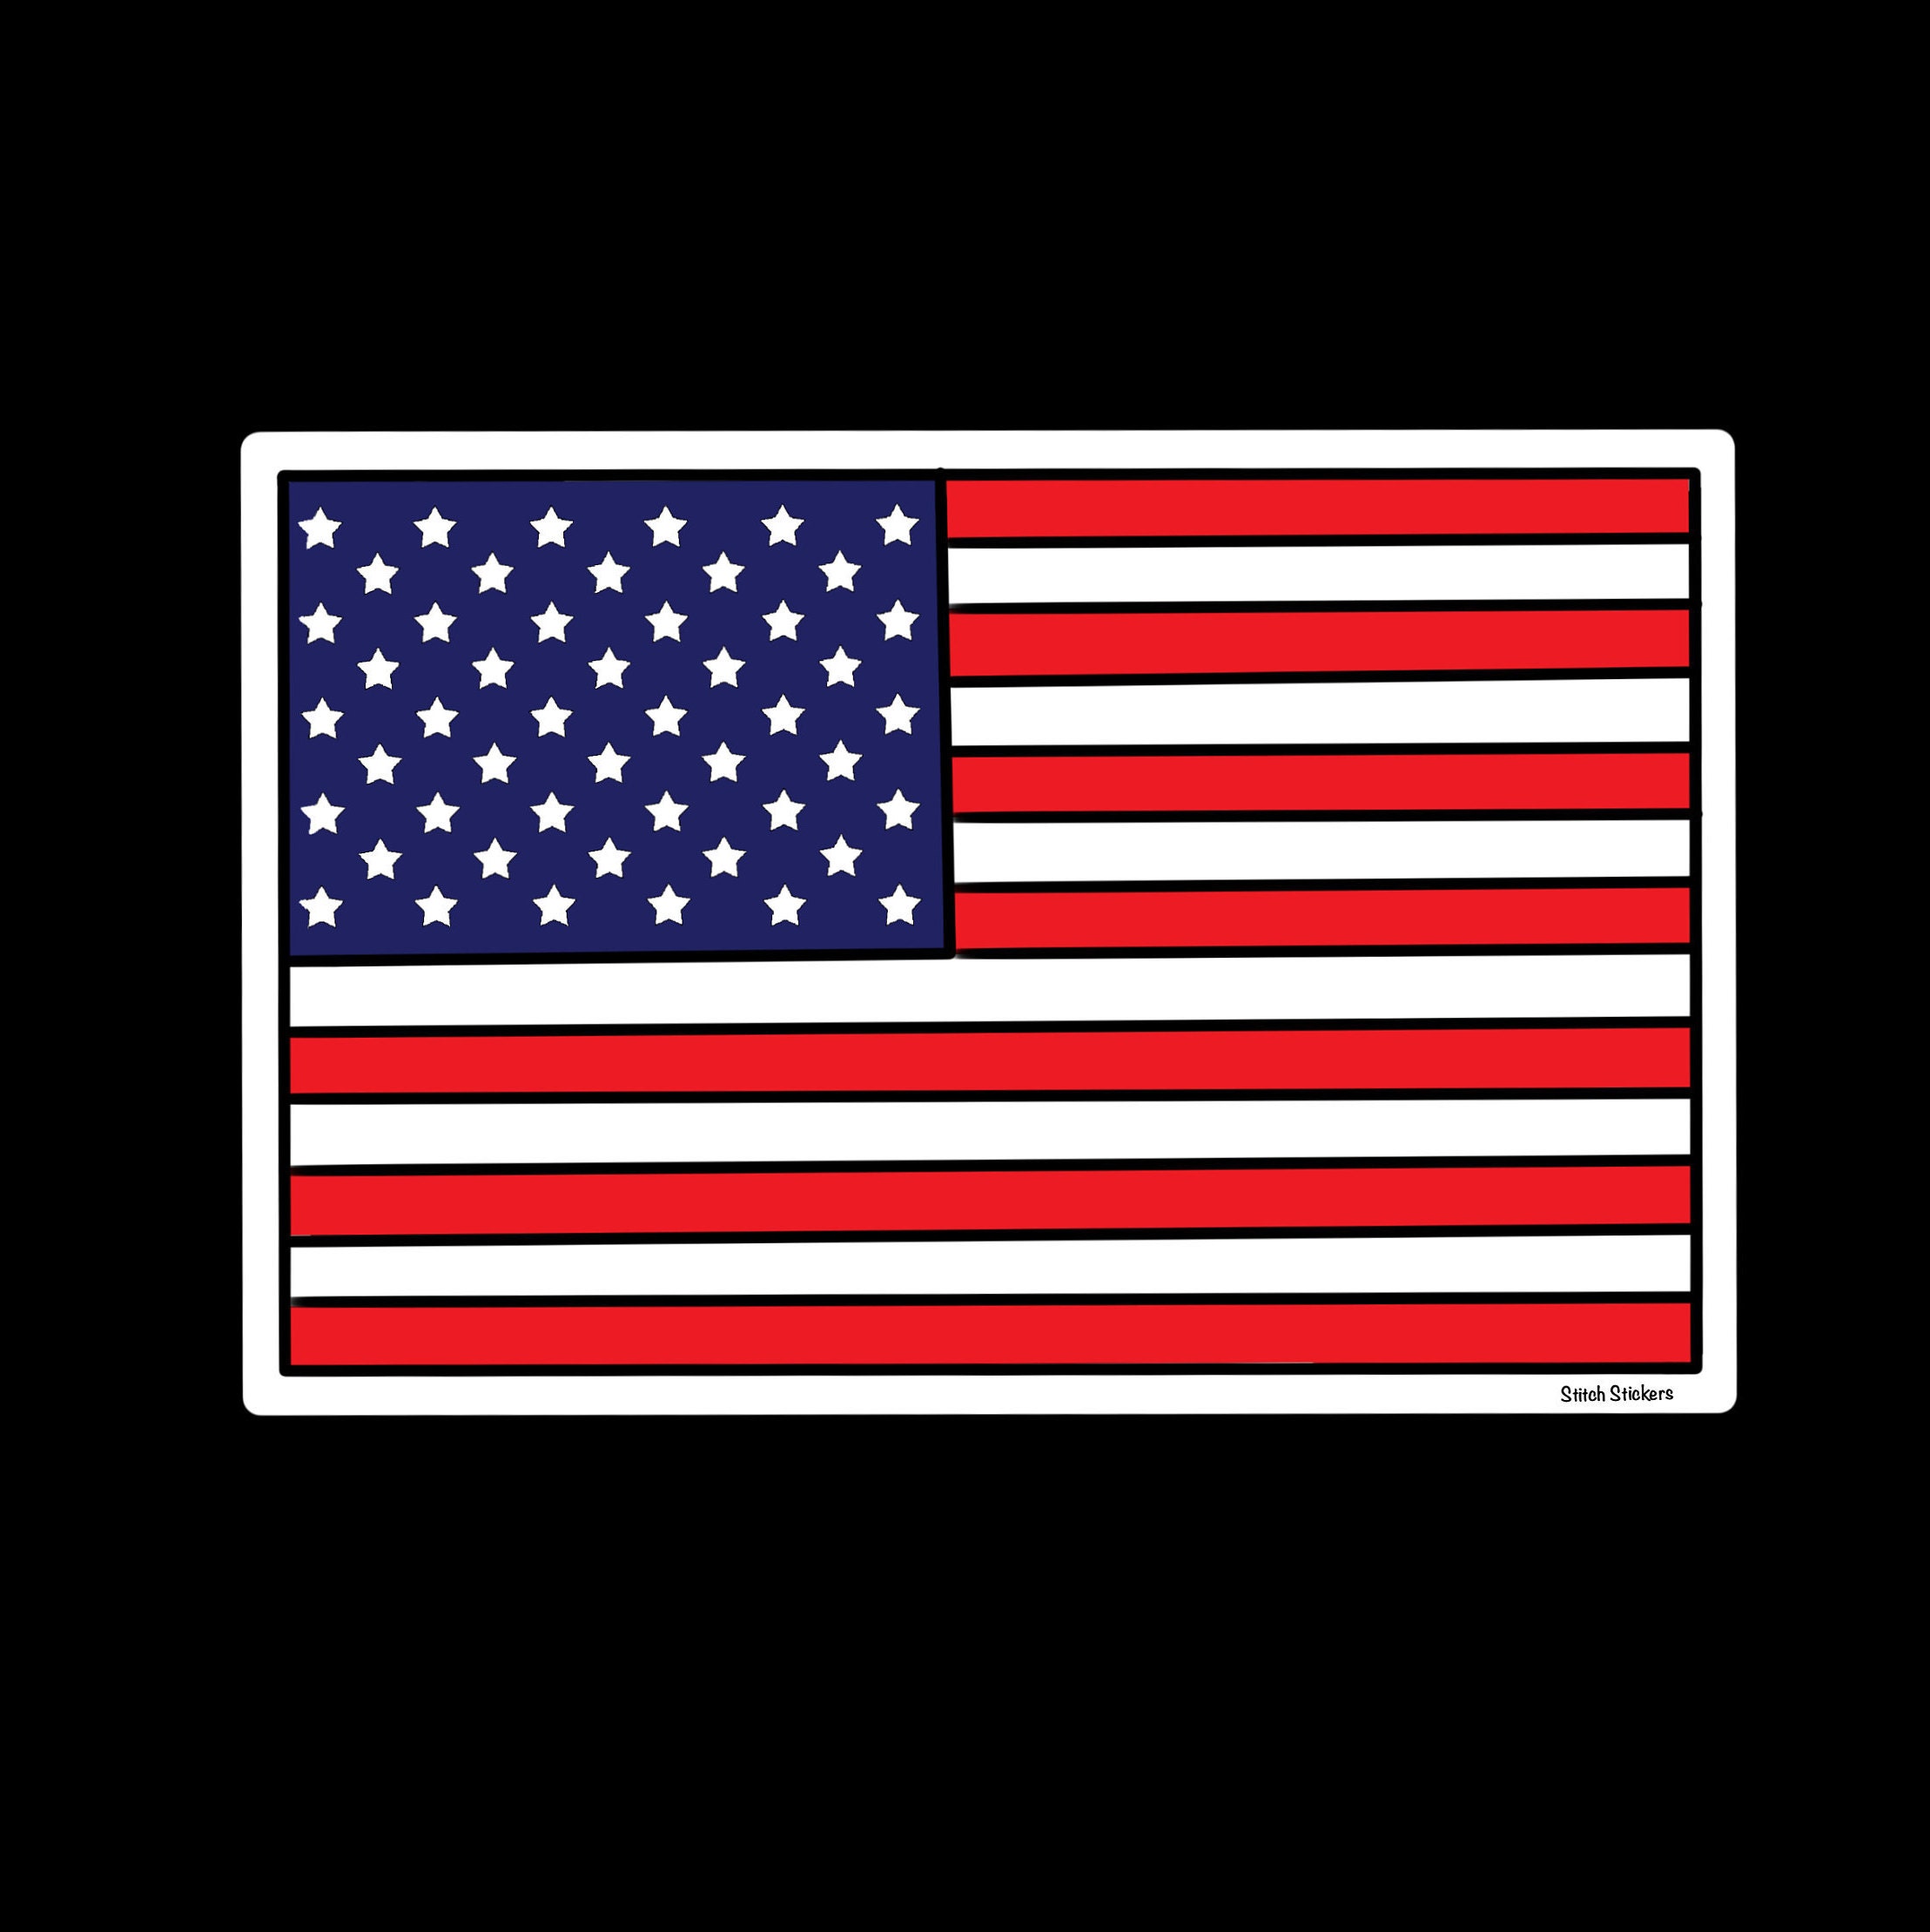 American Flag Sticker Vinyl Flag Sticker Vinyl Flag Decal Etsy